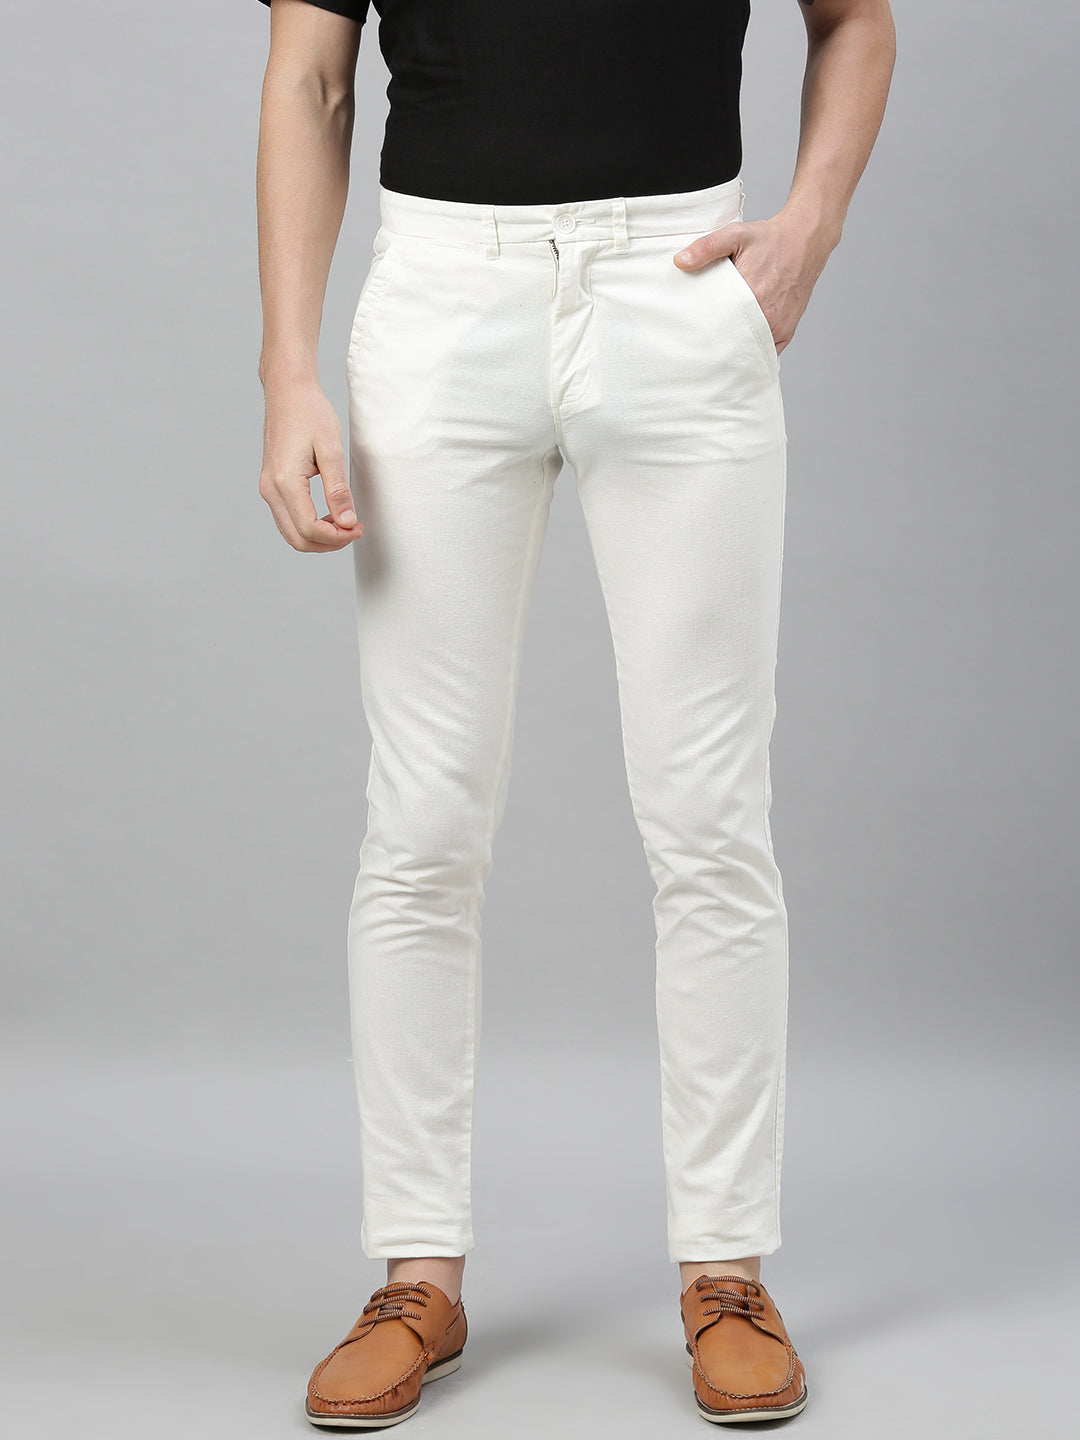 New Top quality Mens Summer Casual Pants Natural Cotton Linen Trousers  White Linen Elastic Waist Straight Mans Pants  OnshopDealsCom